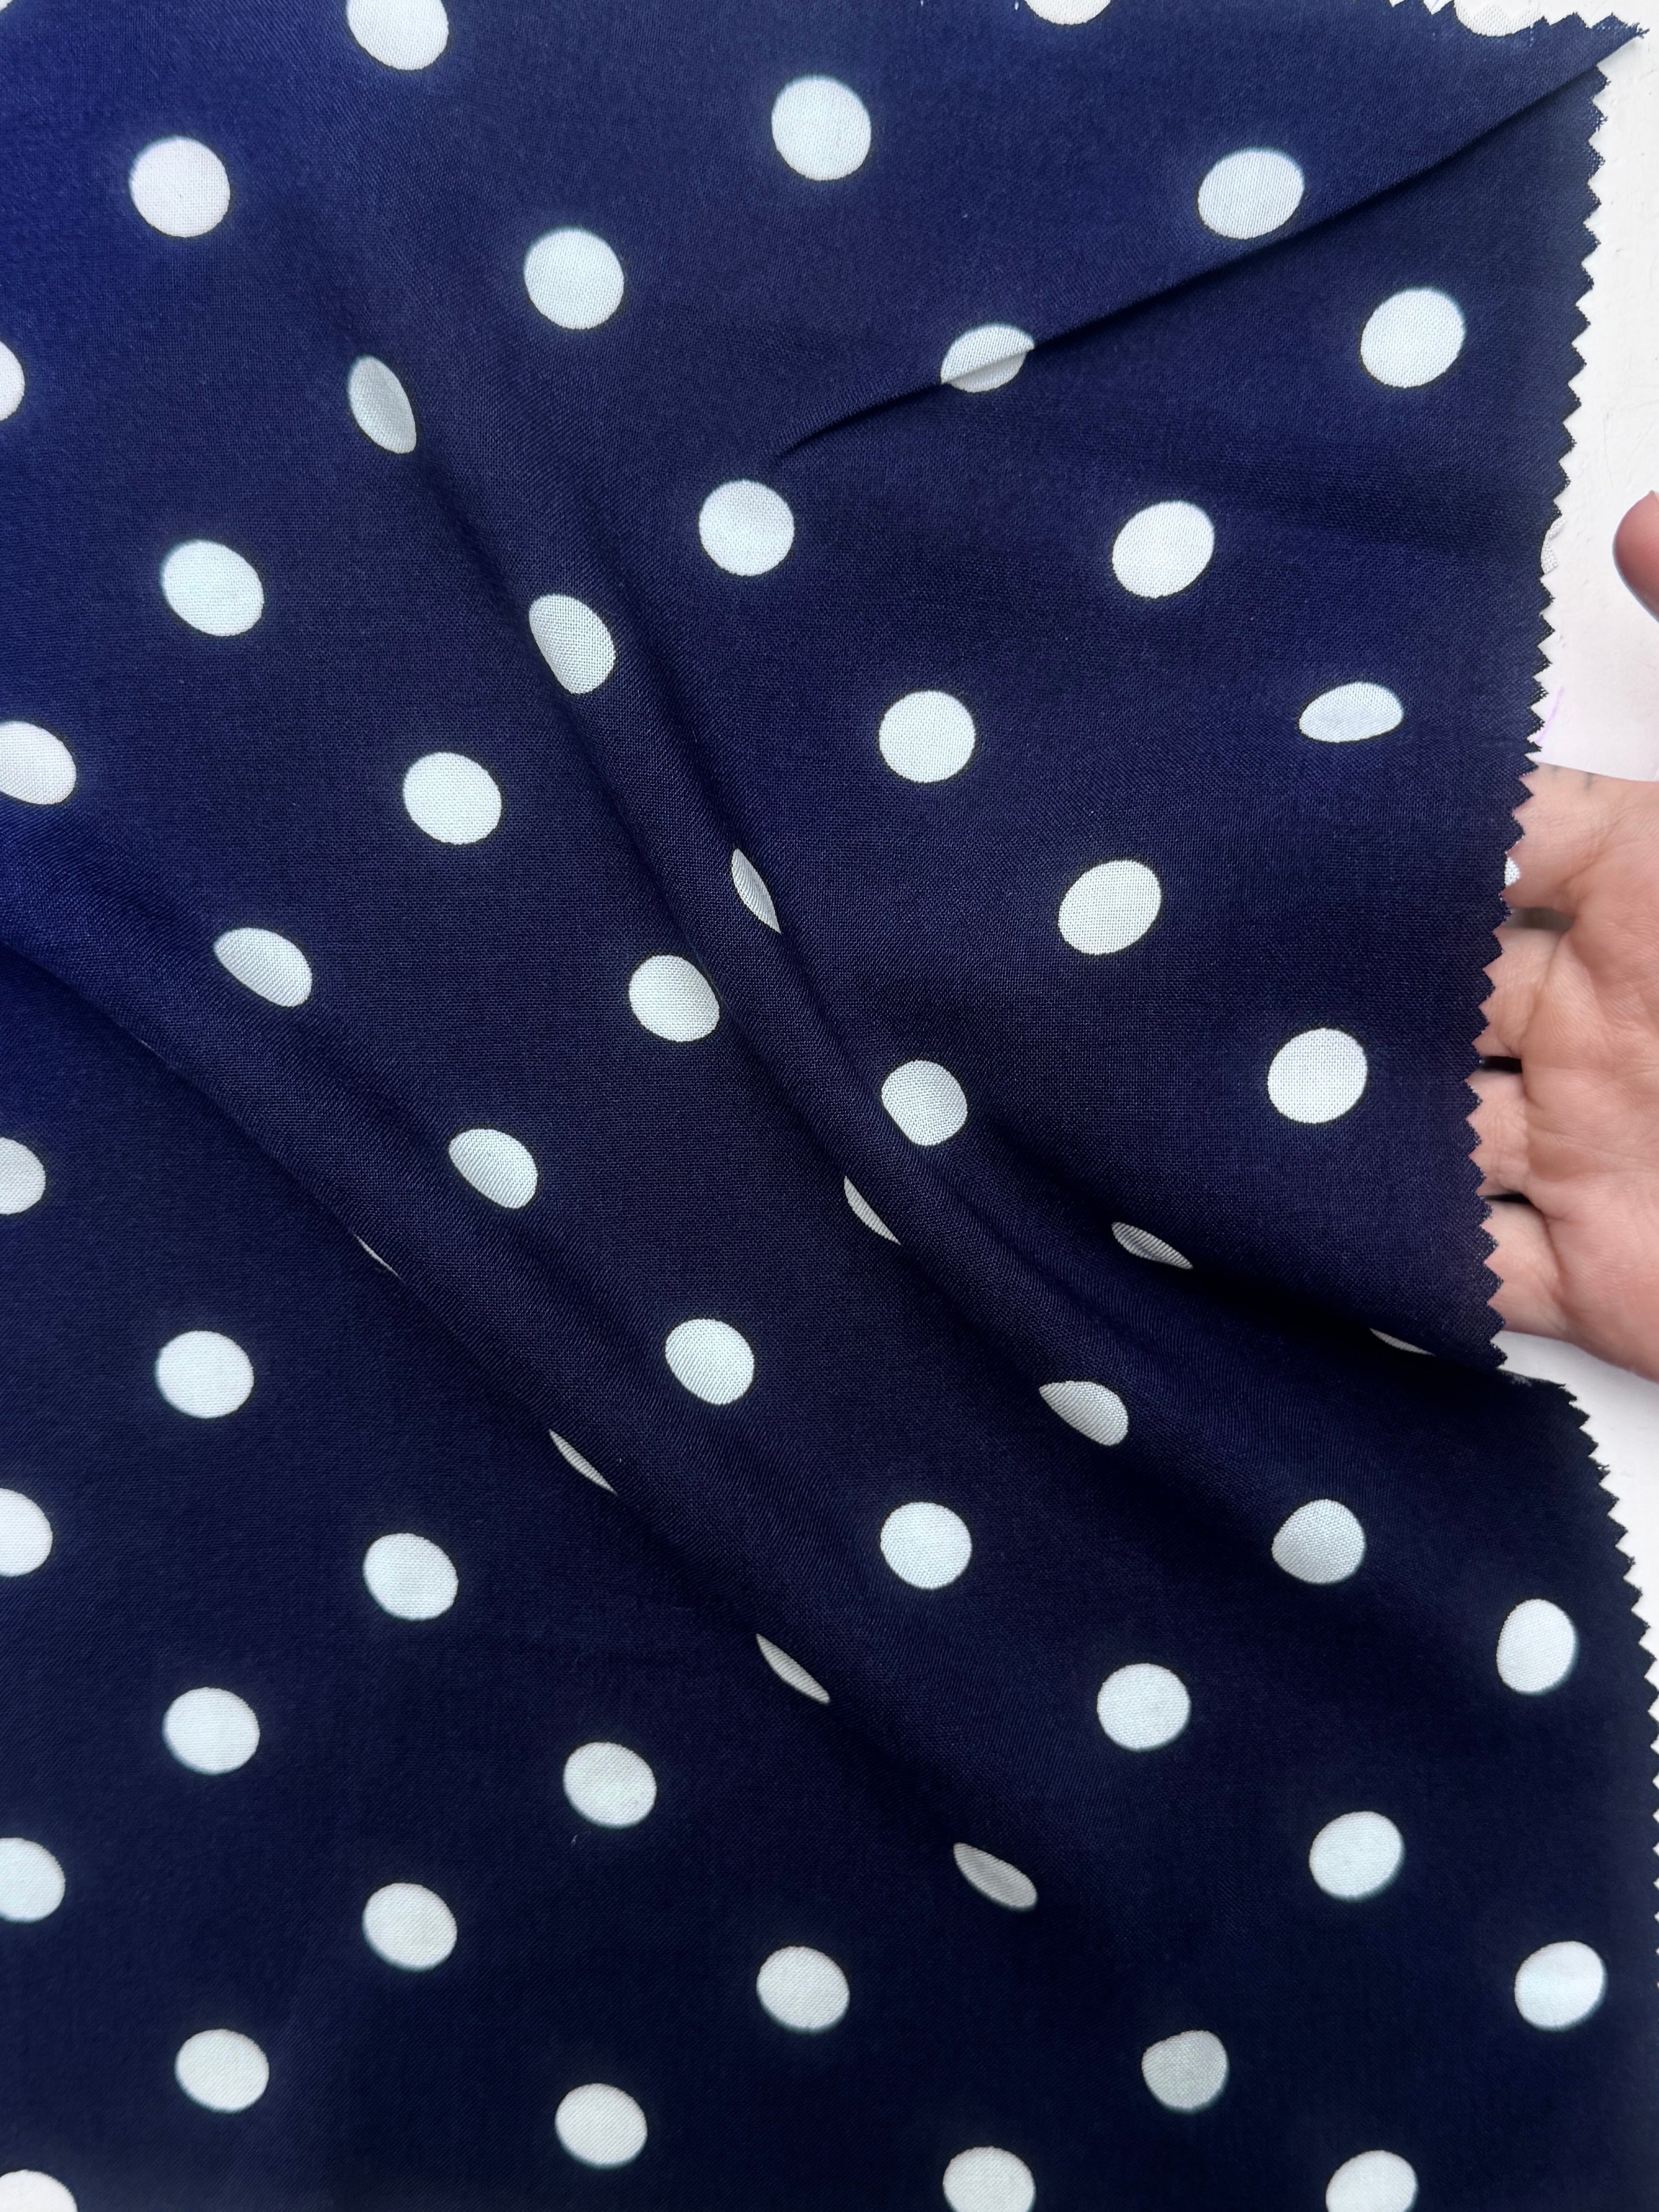 Navy Polka dots on White Rayon Challis, Blue Rayon Challis, Navy and white Rayon Challis, eco-friendly fabric, pure Rayon Challis fabric, Rayon Challis, Rayon Challis fabric, kiki textiles, sewing  